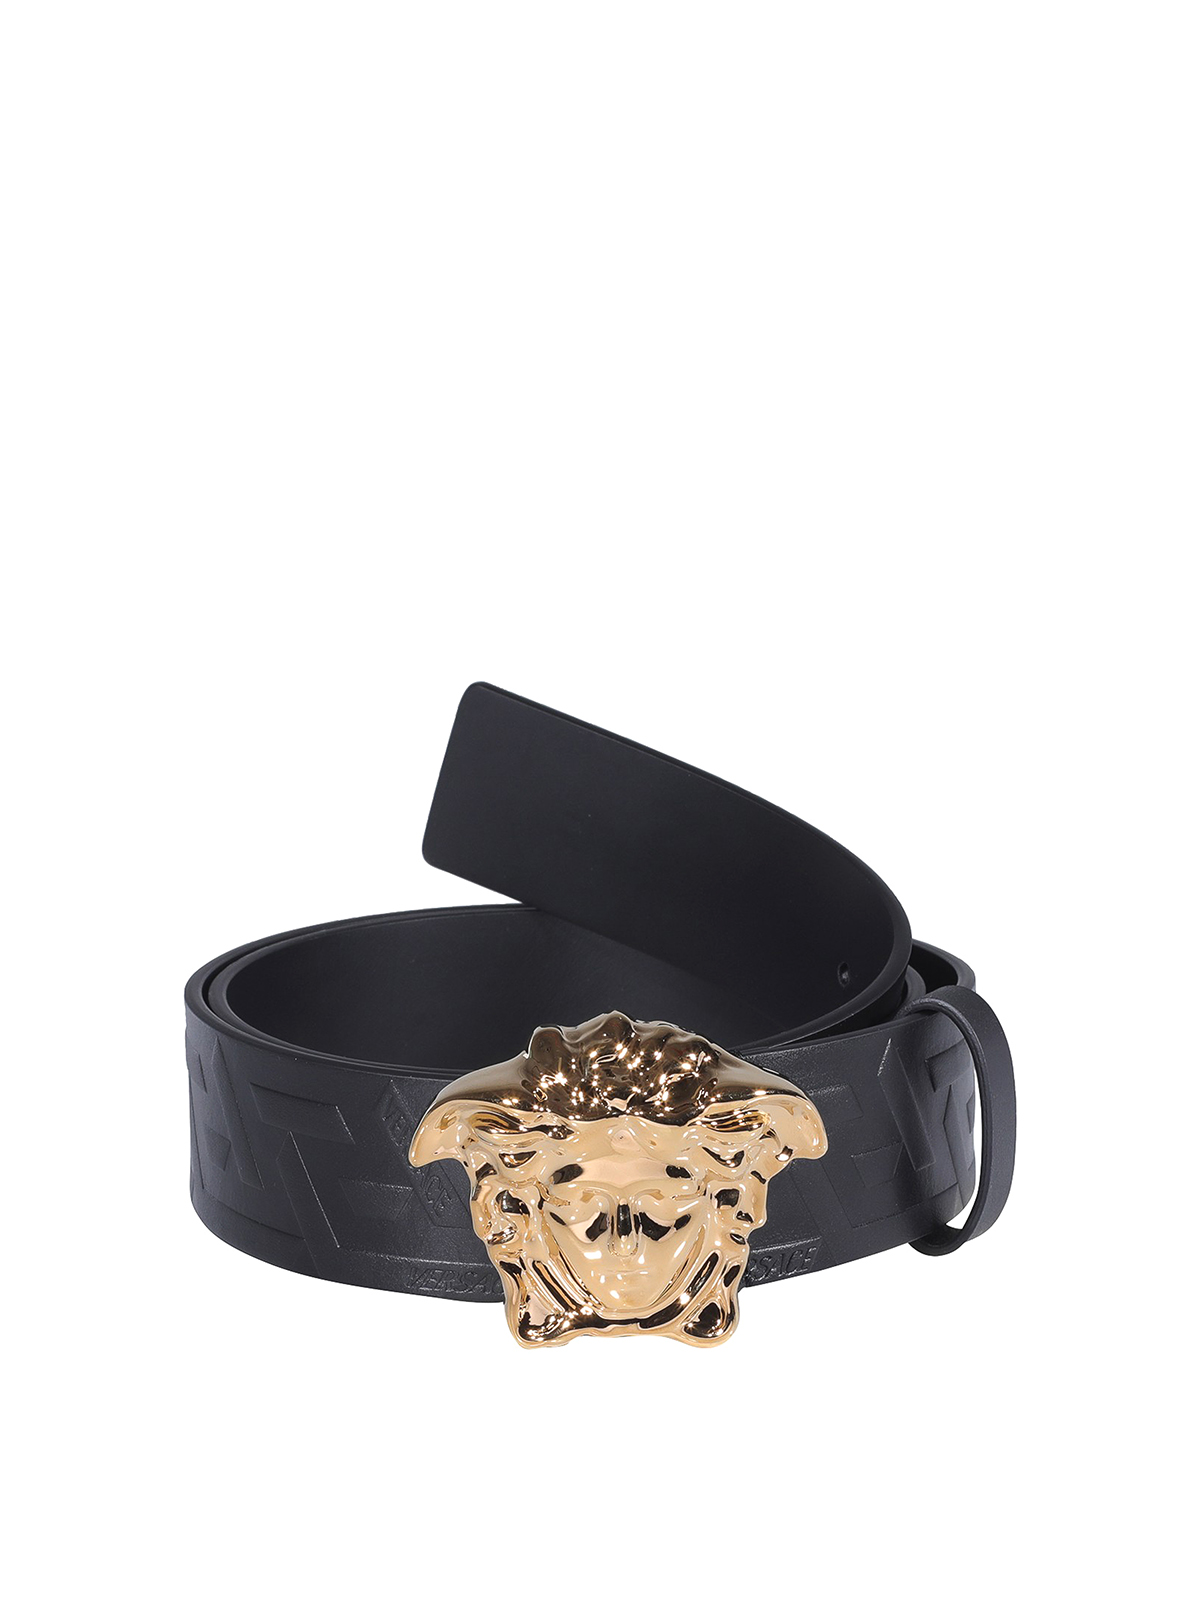 Versace Black Leather Medusa Buckle Belt 105CM Versace